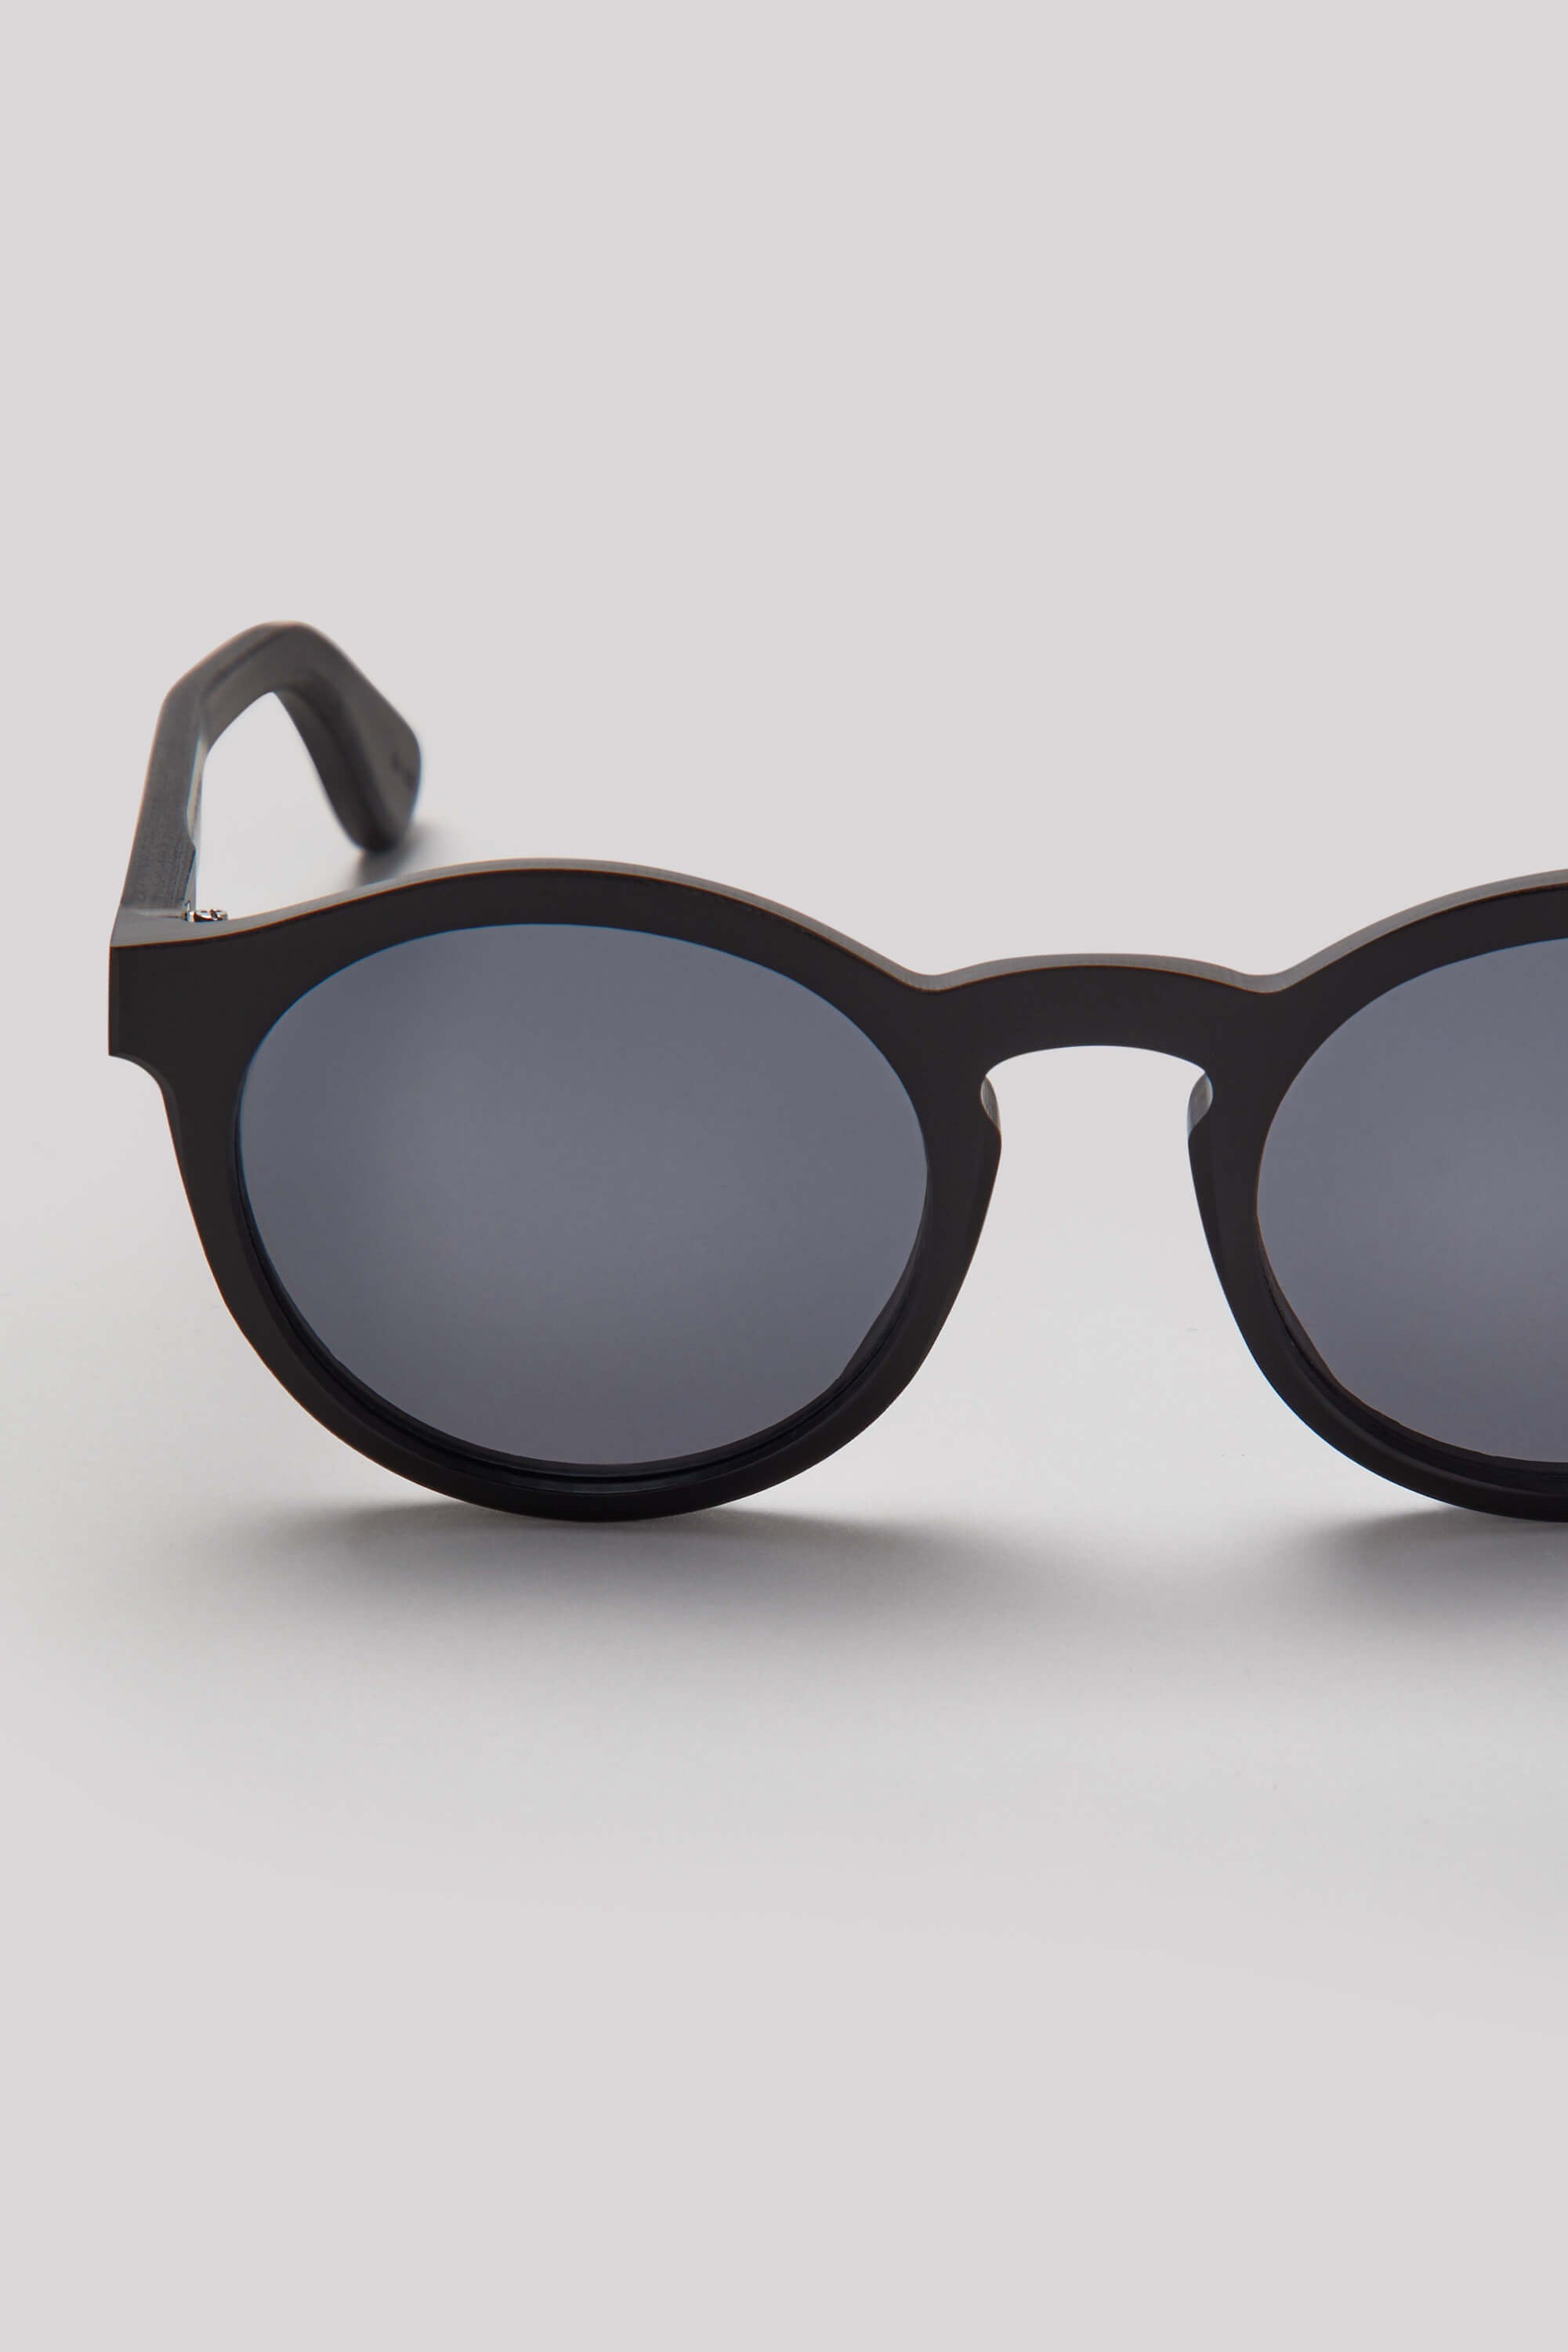 Amazon.com: WearMe Pro - Square Polarized Aviator Modern Rectangular Men's  Sunglasses : Clothing, Shoes & Jewelry